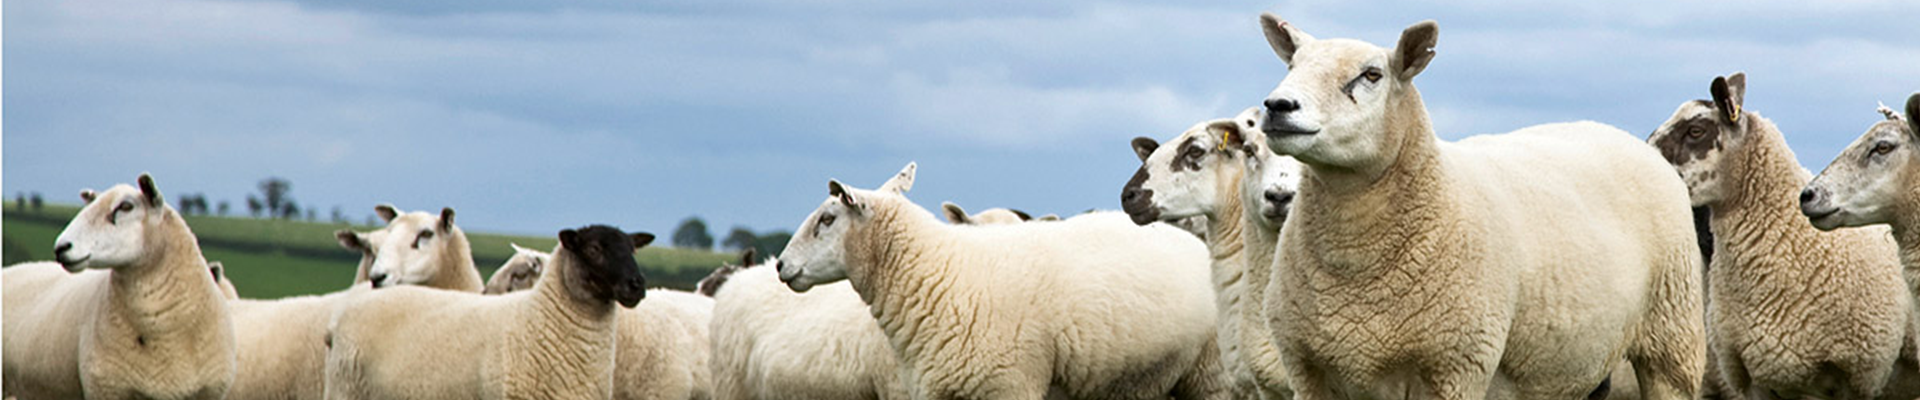 Sheep banner image